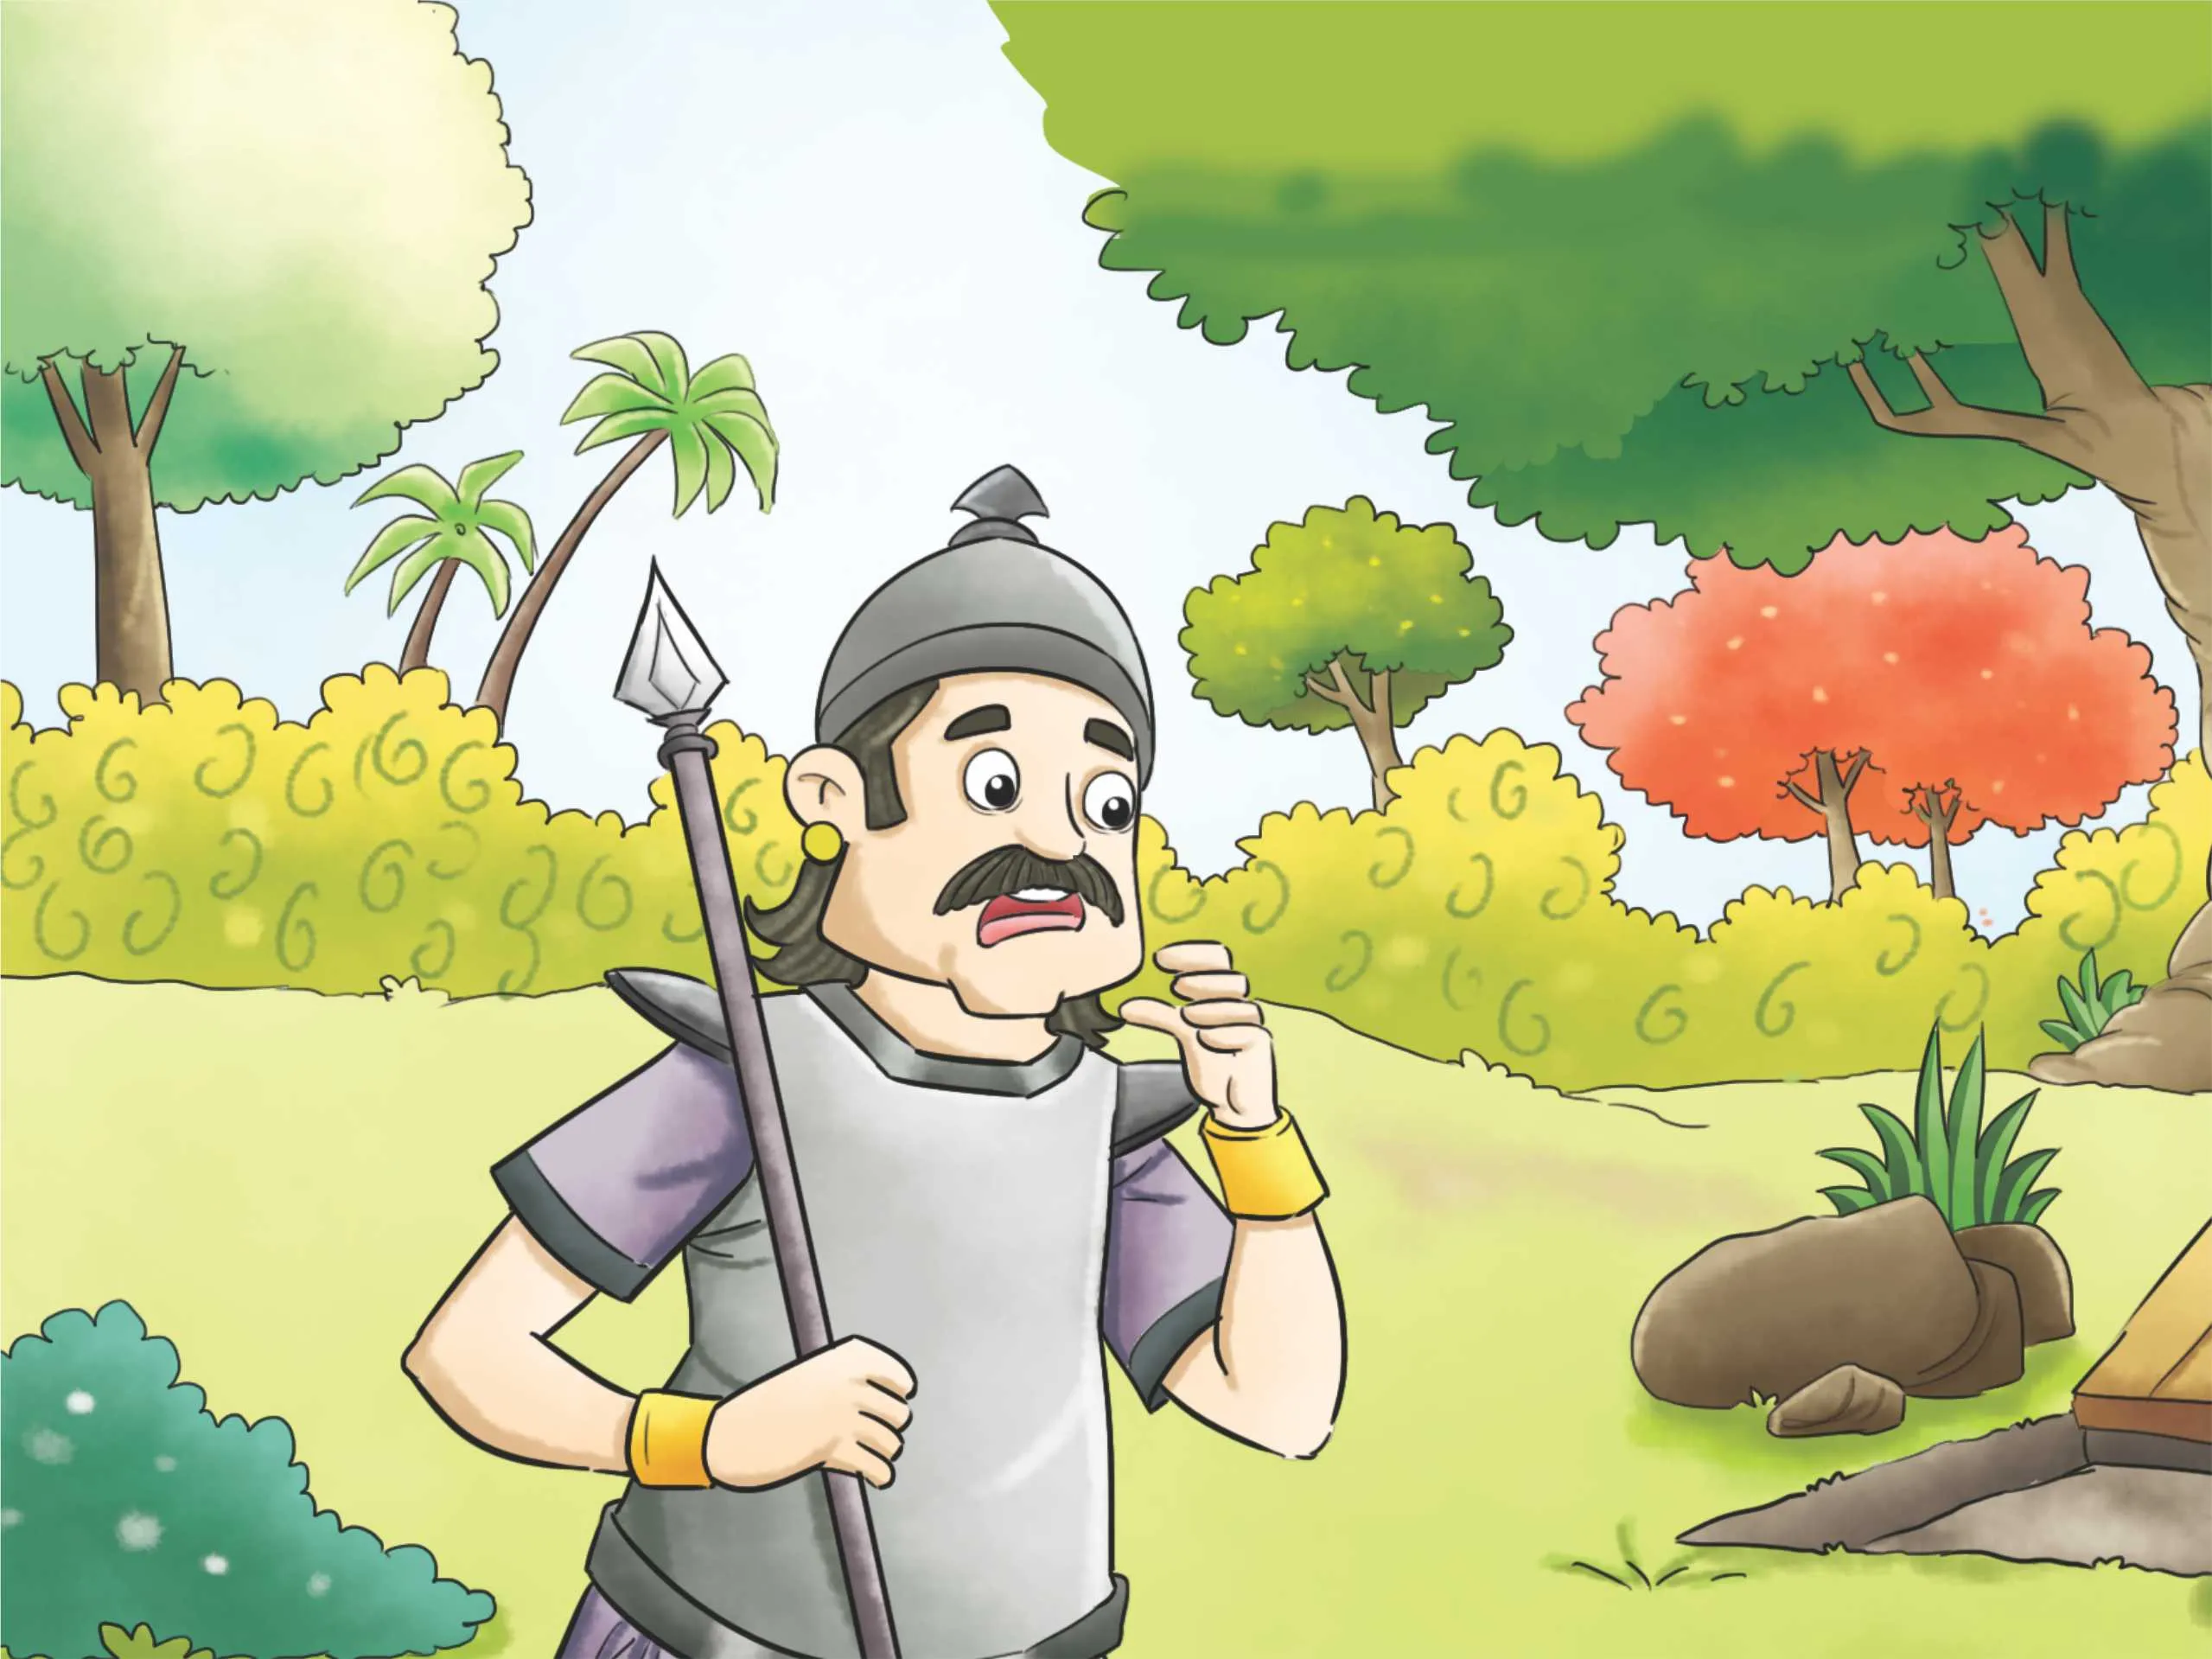 Cartoon image of a kingsmen